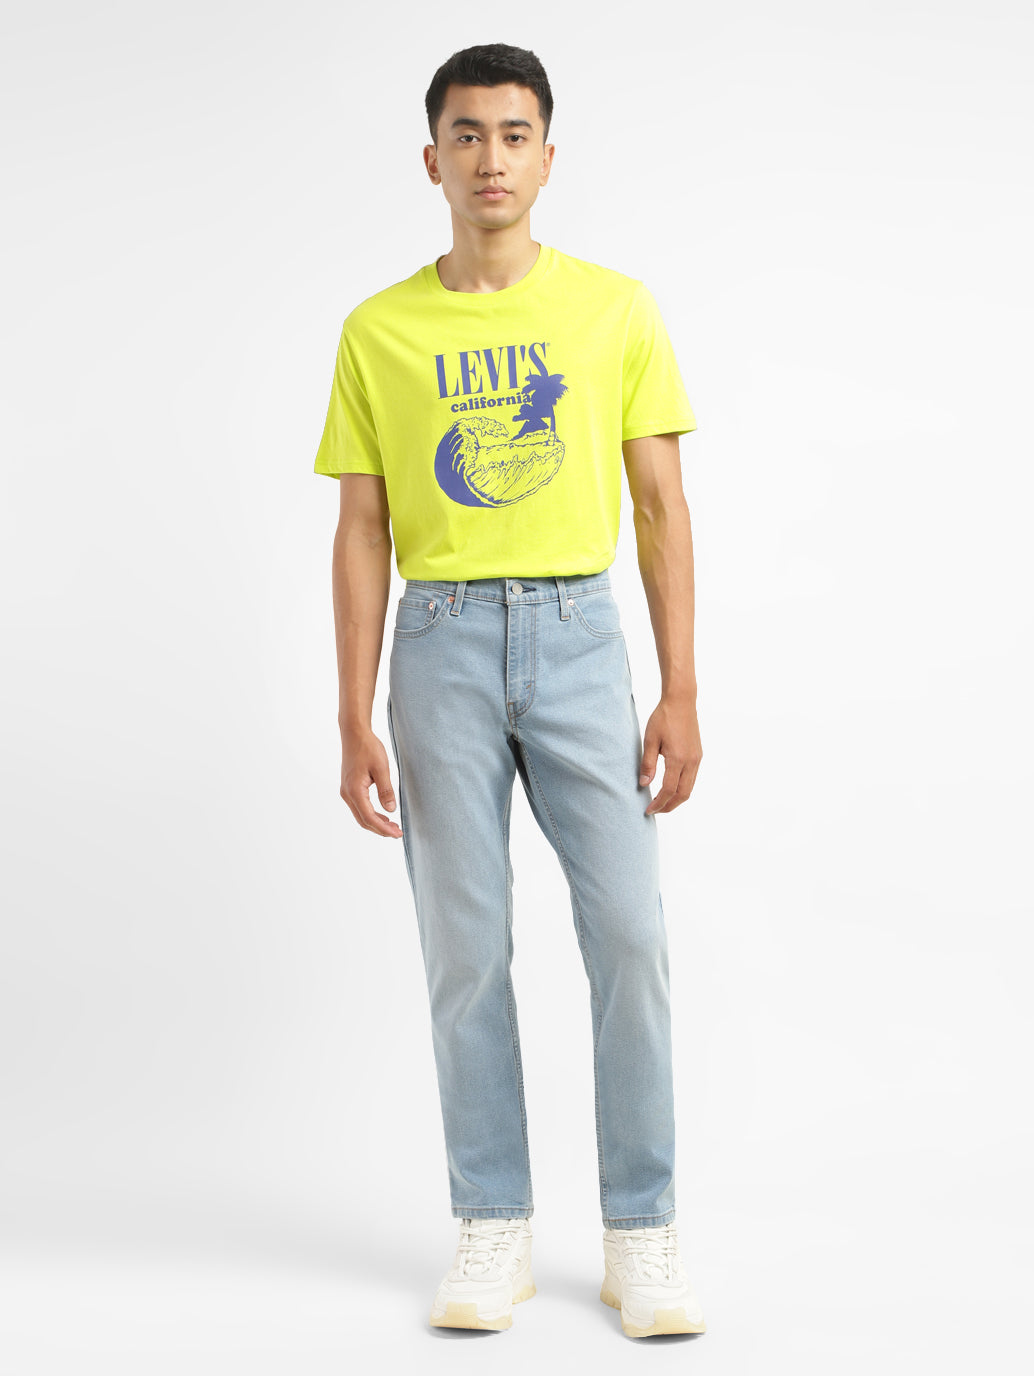 Men's 511 Light Blue Slim Fit Jeans